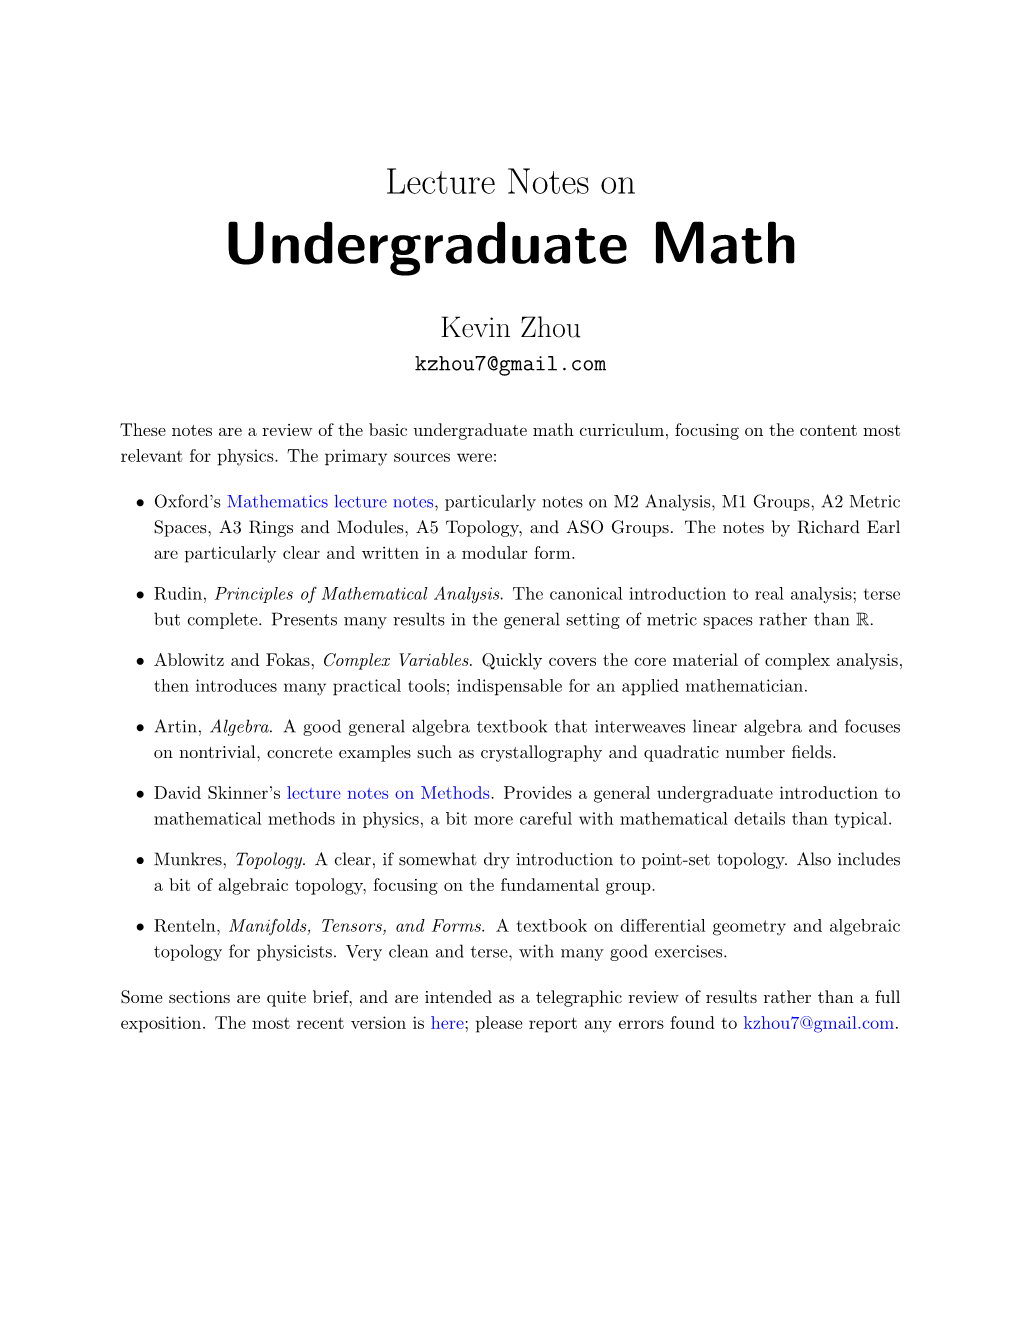 Undergraduate Math